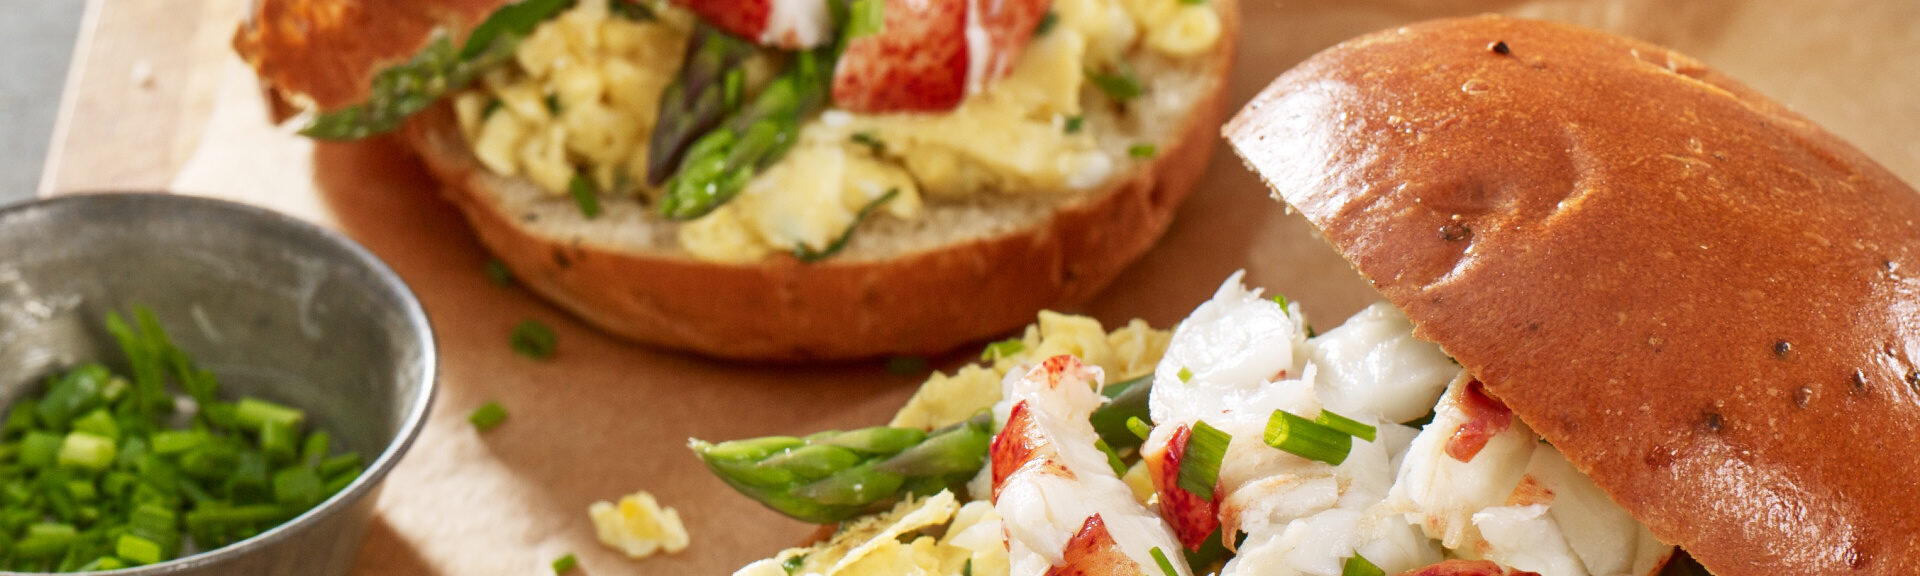 Scrambled Eggs with Maine Lobster and Brioche recipe image